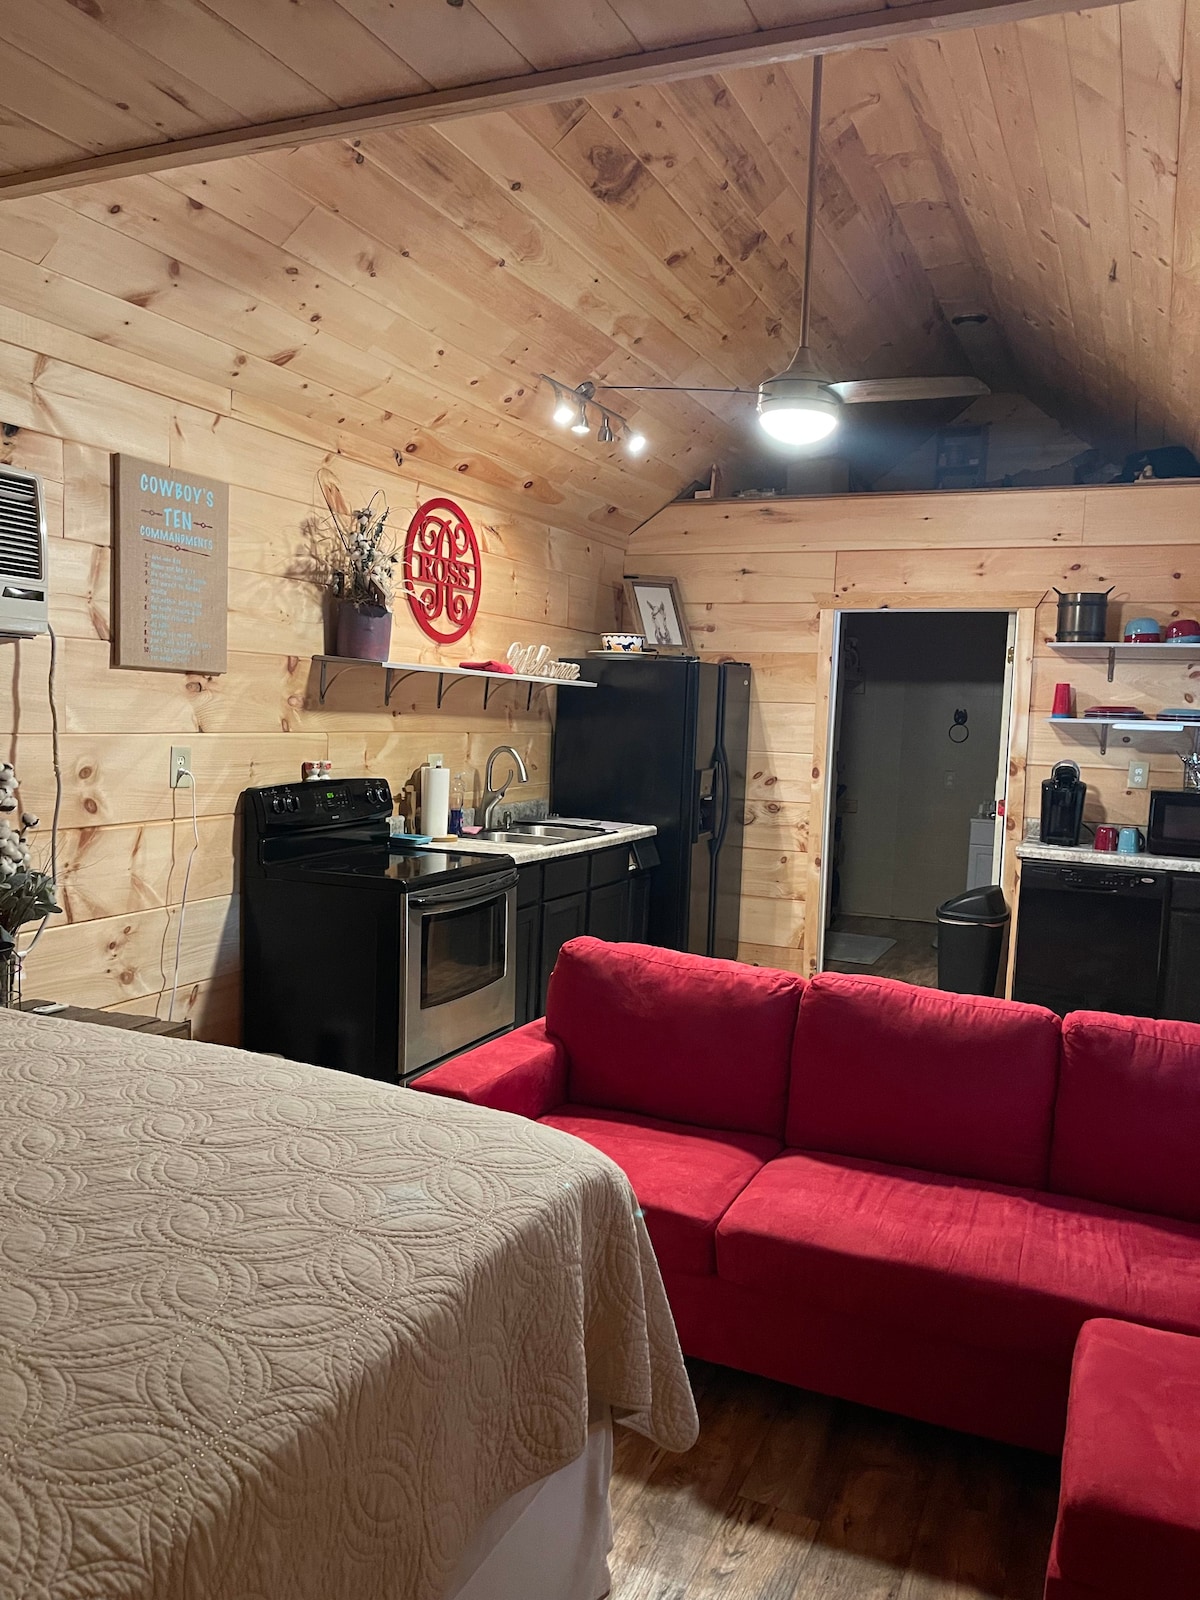 Delightful 1-bedroom cabin.